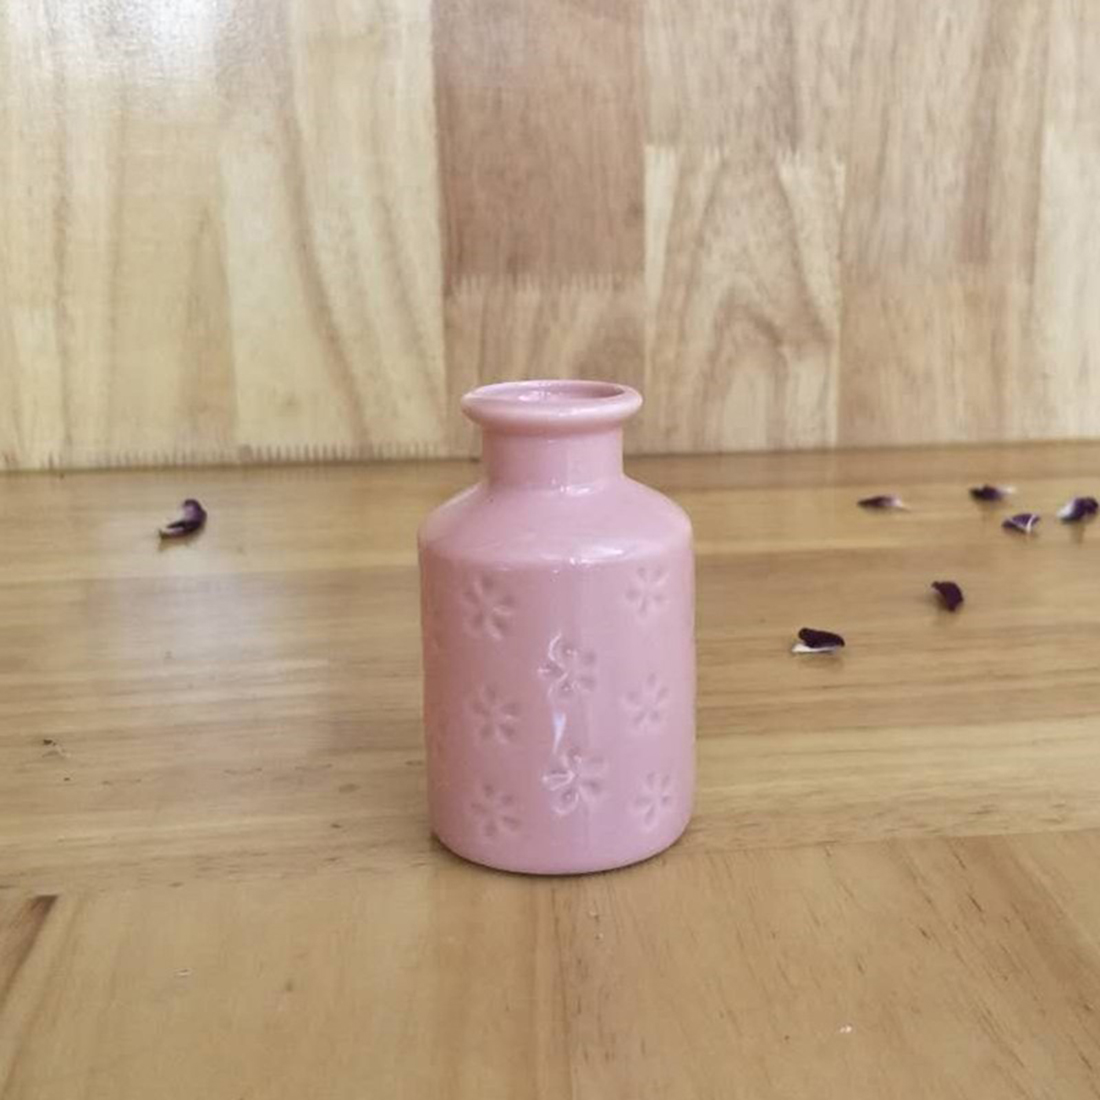 1:pink